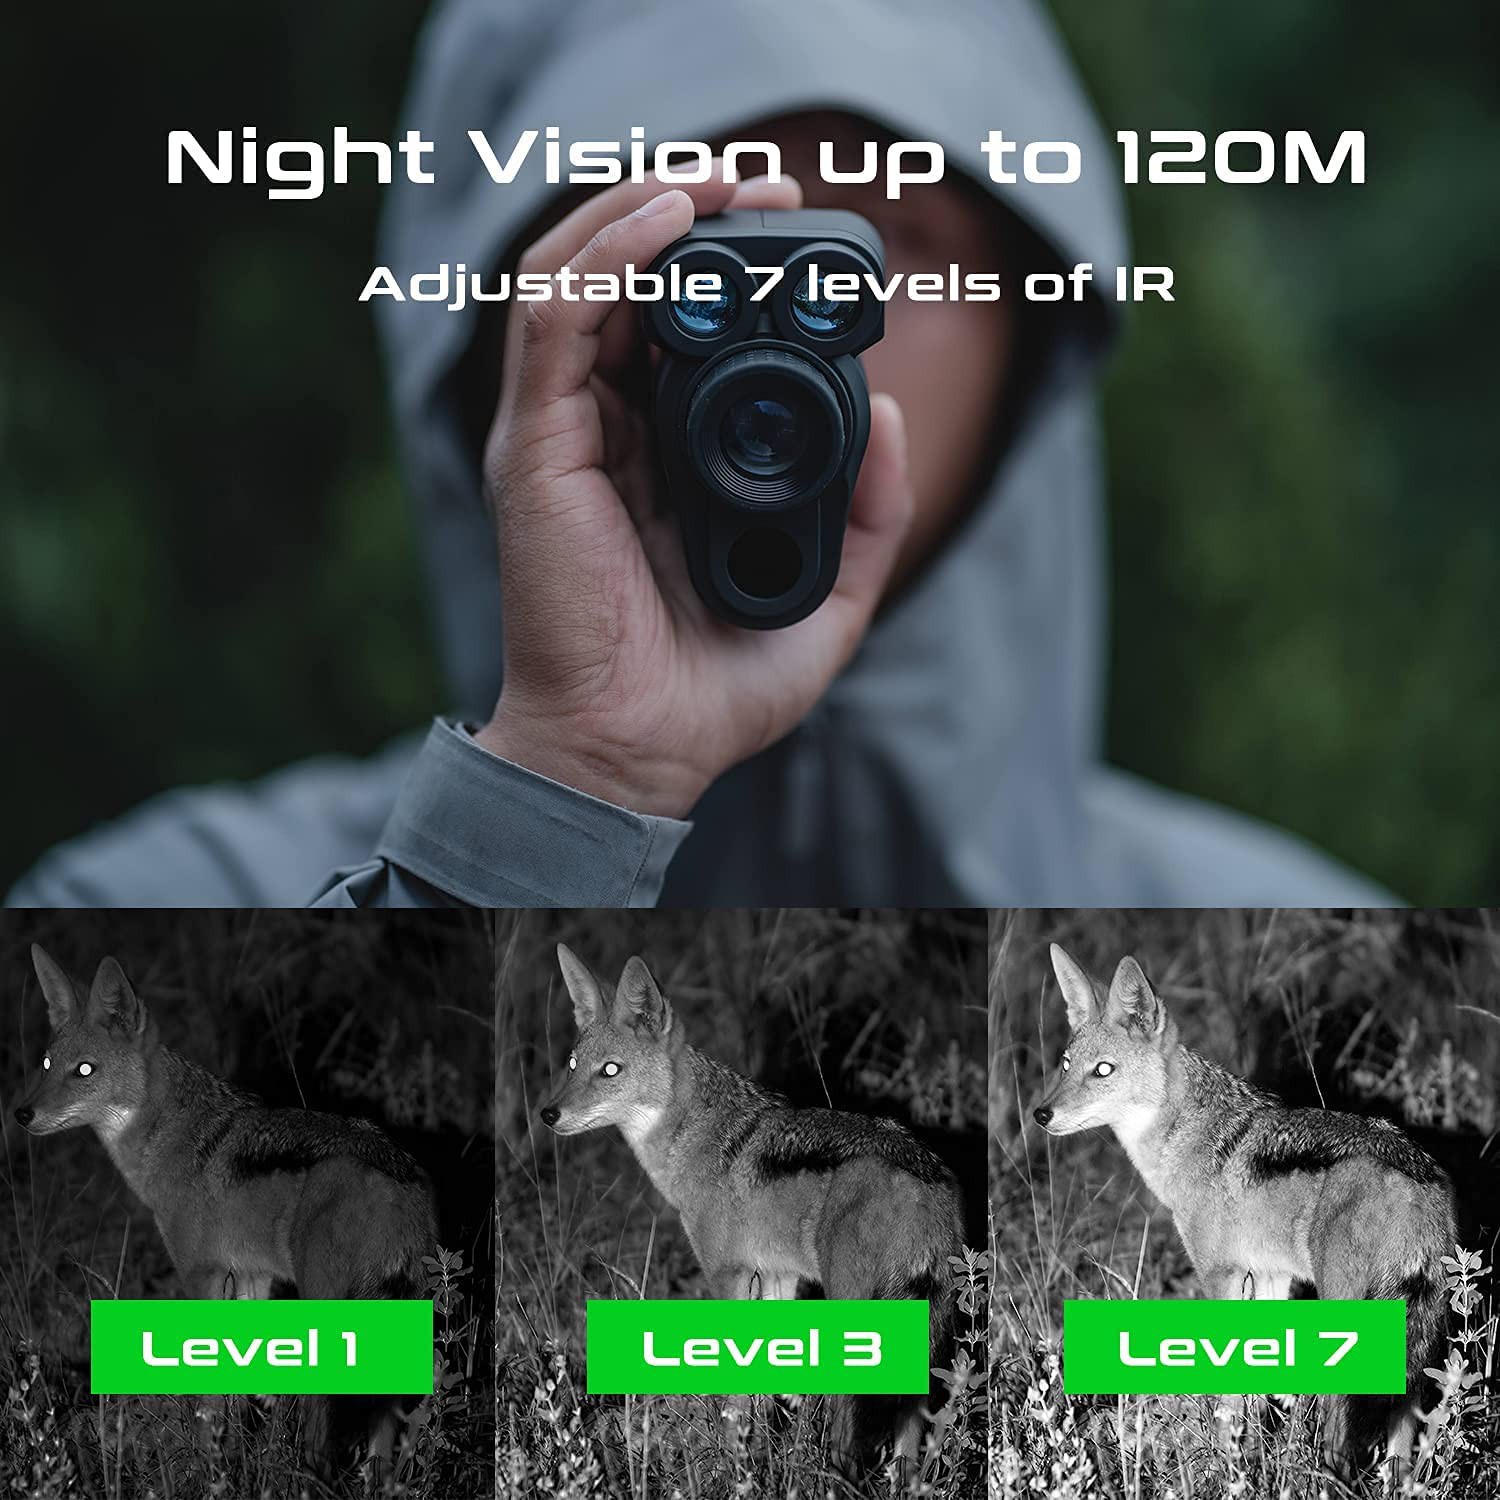 bermata dengan night vision hingga 120m di malam hari